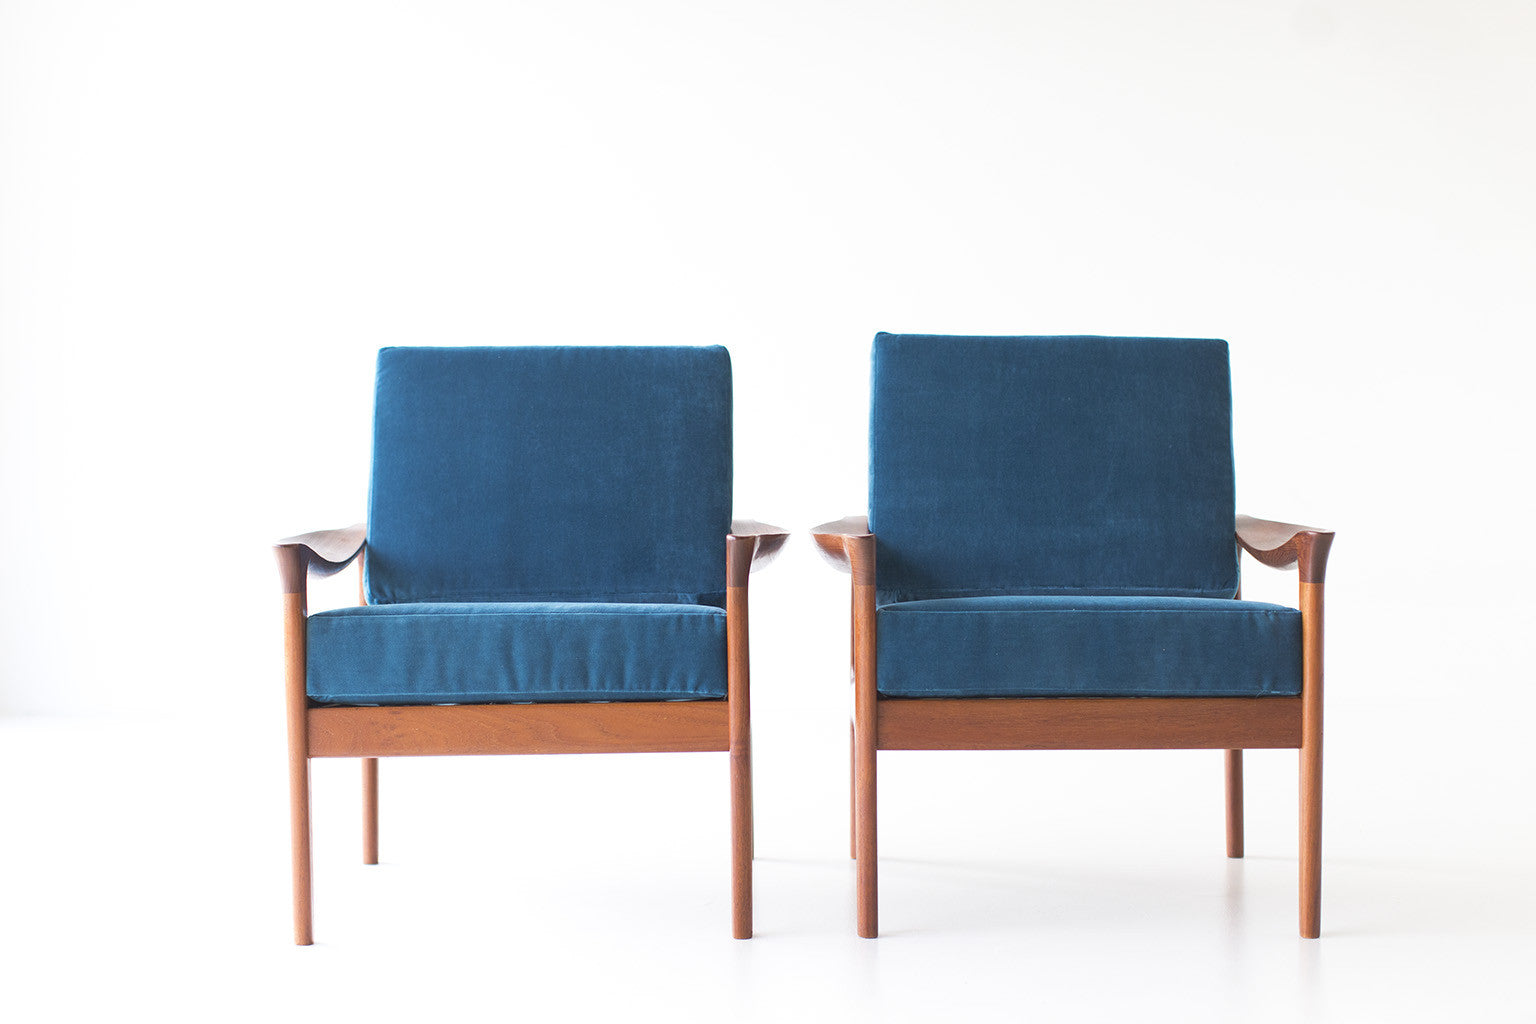 Danish Teak Lounge Chairs by Glostrup Mobelfabrik - 01141625